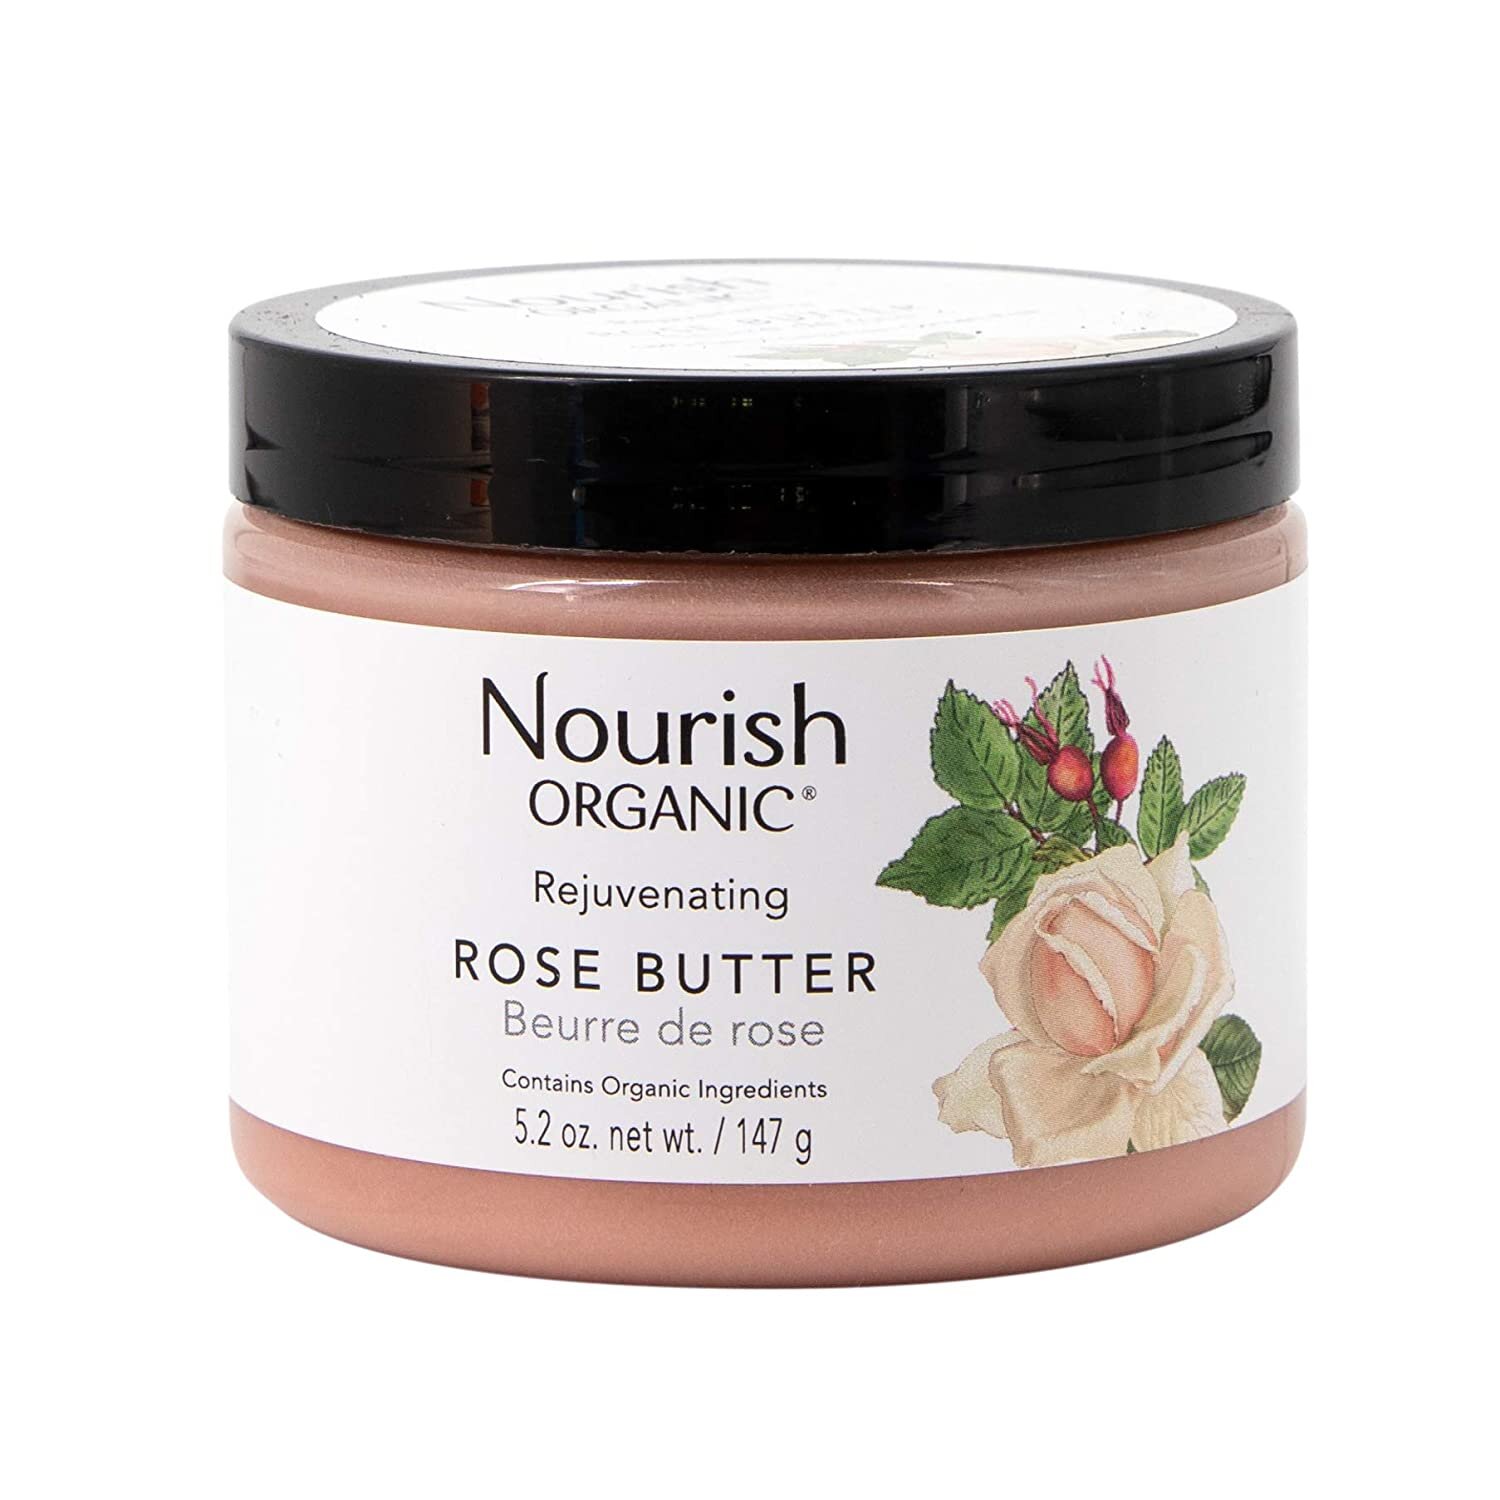 Nourish Rose Butter $11